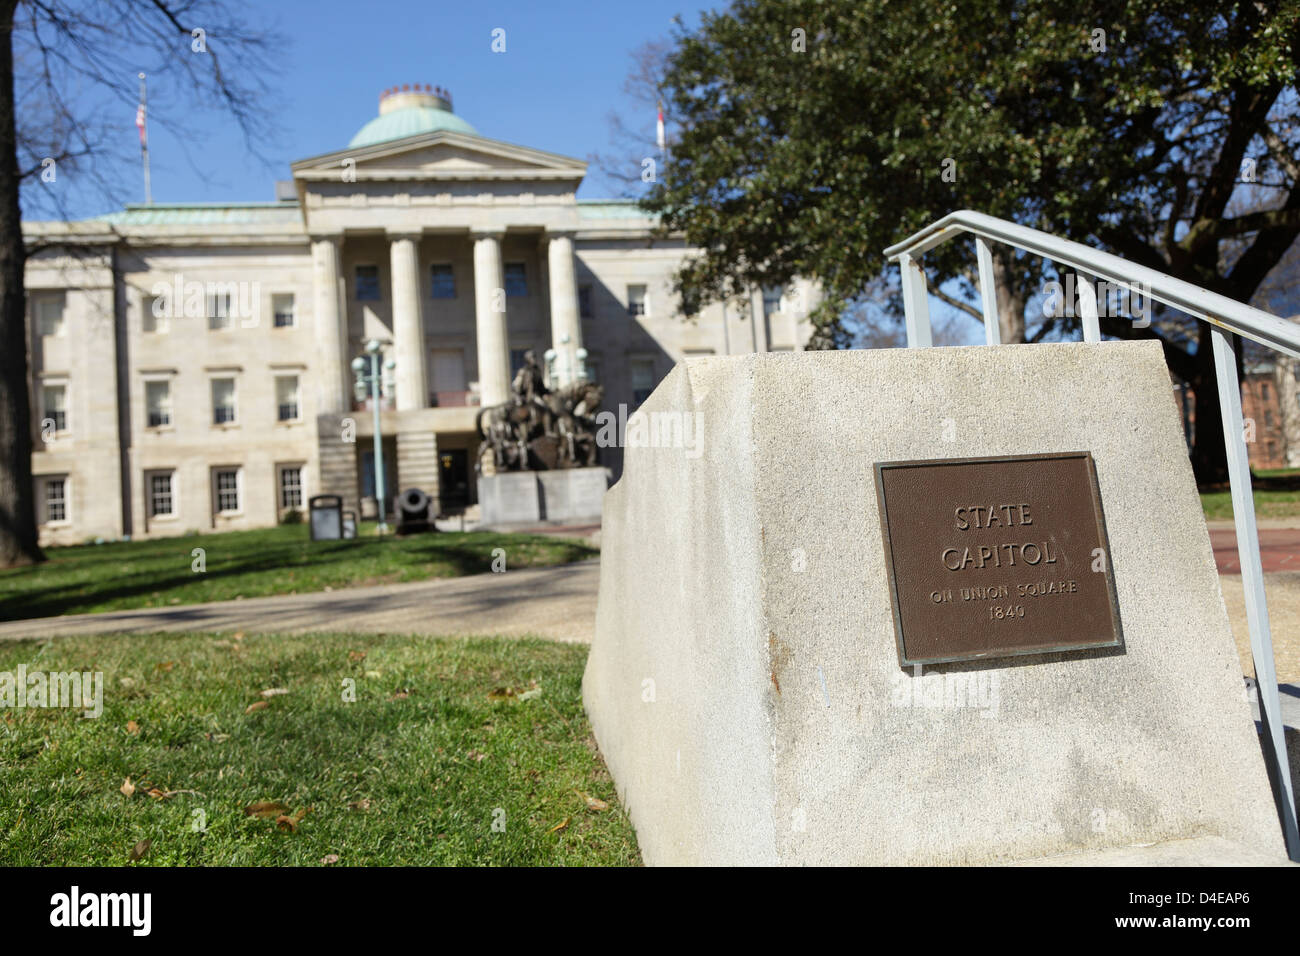 State Capitol on Union Square, Raleigh, North Carolina, USA Stock Photo